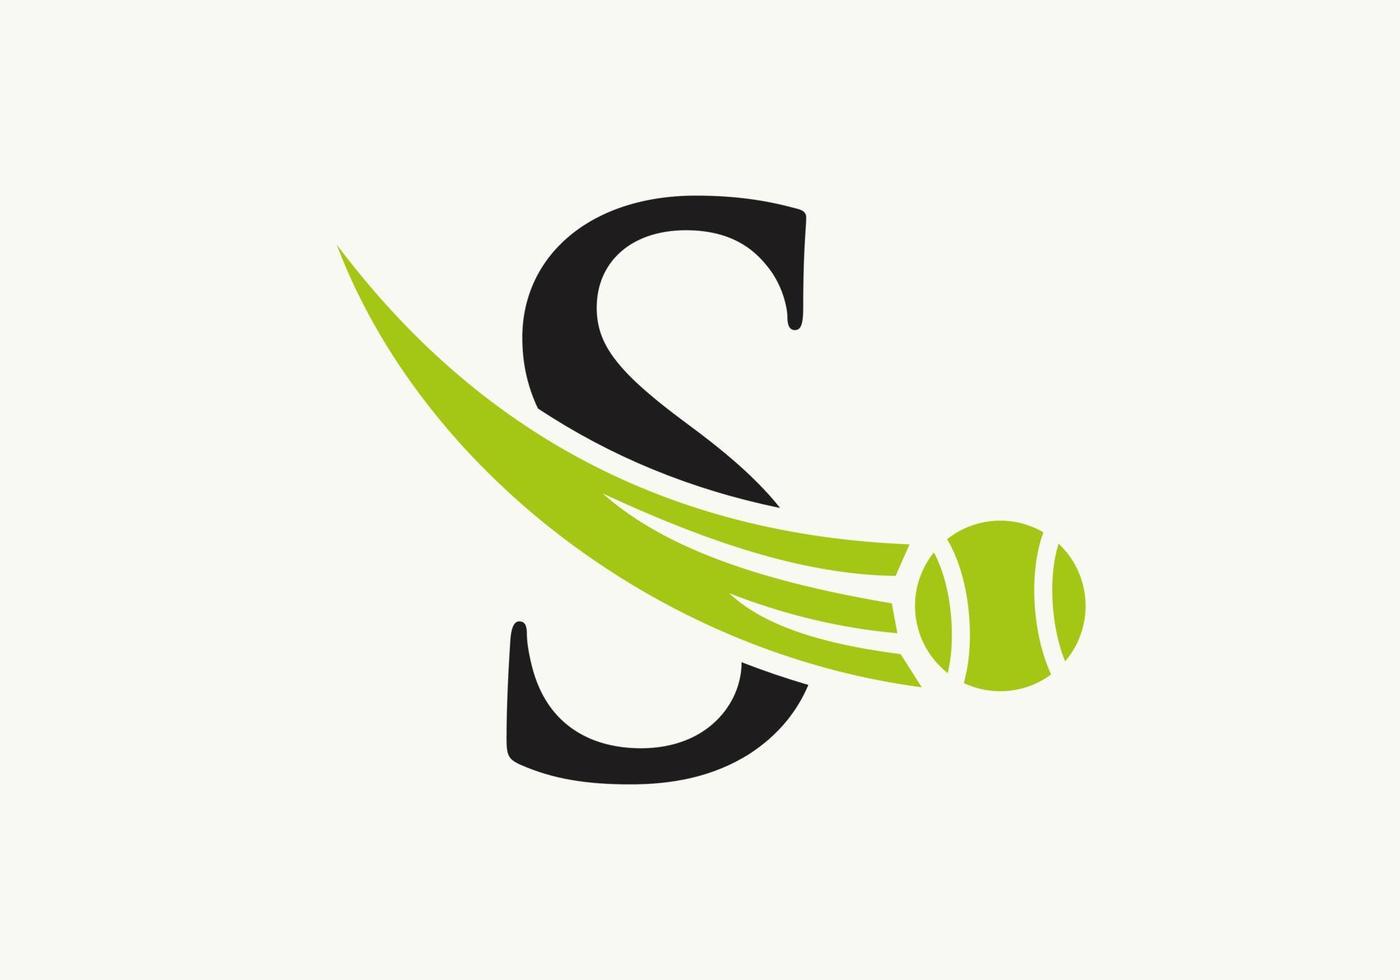 brief s tennis logo ontwerp sjabloon. tennis sport academie club logo vector